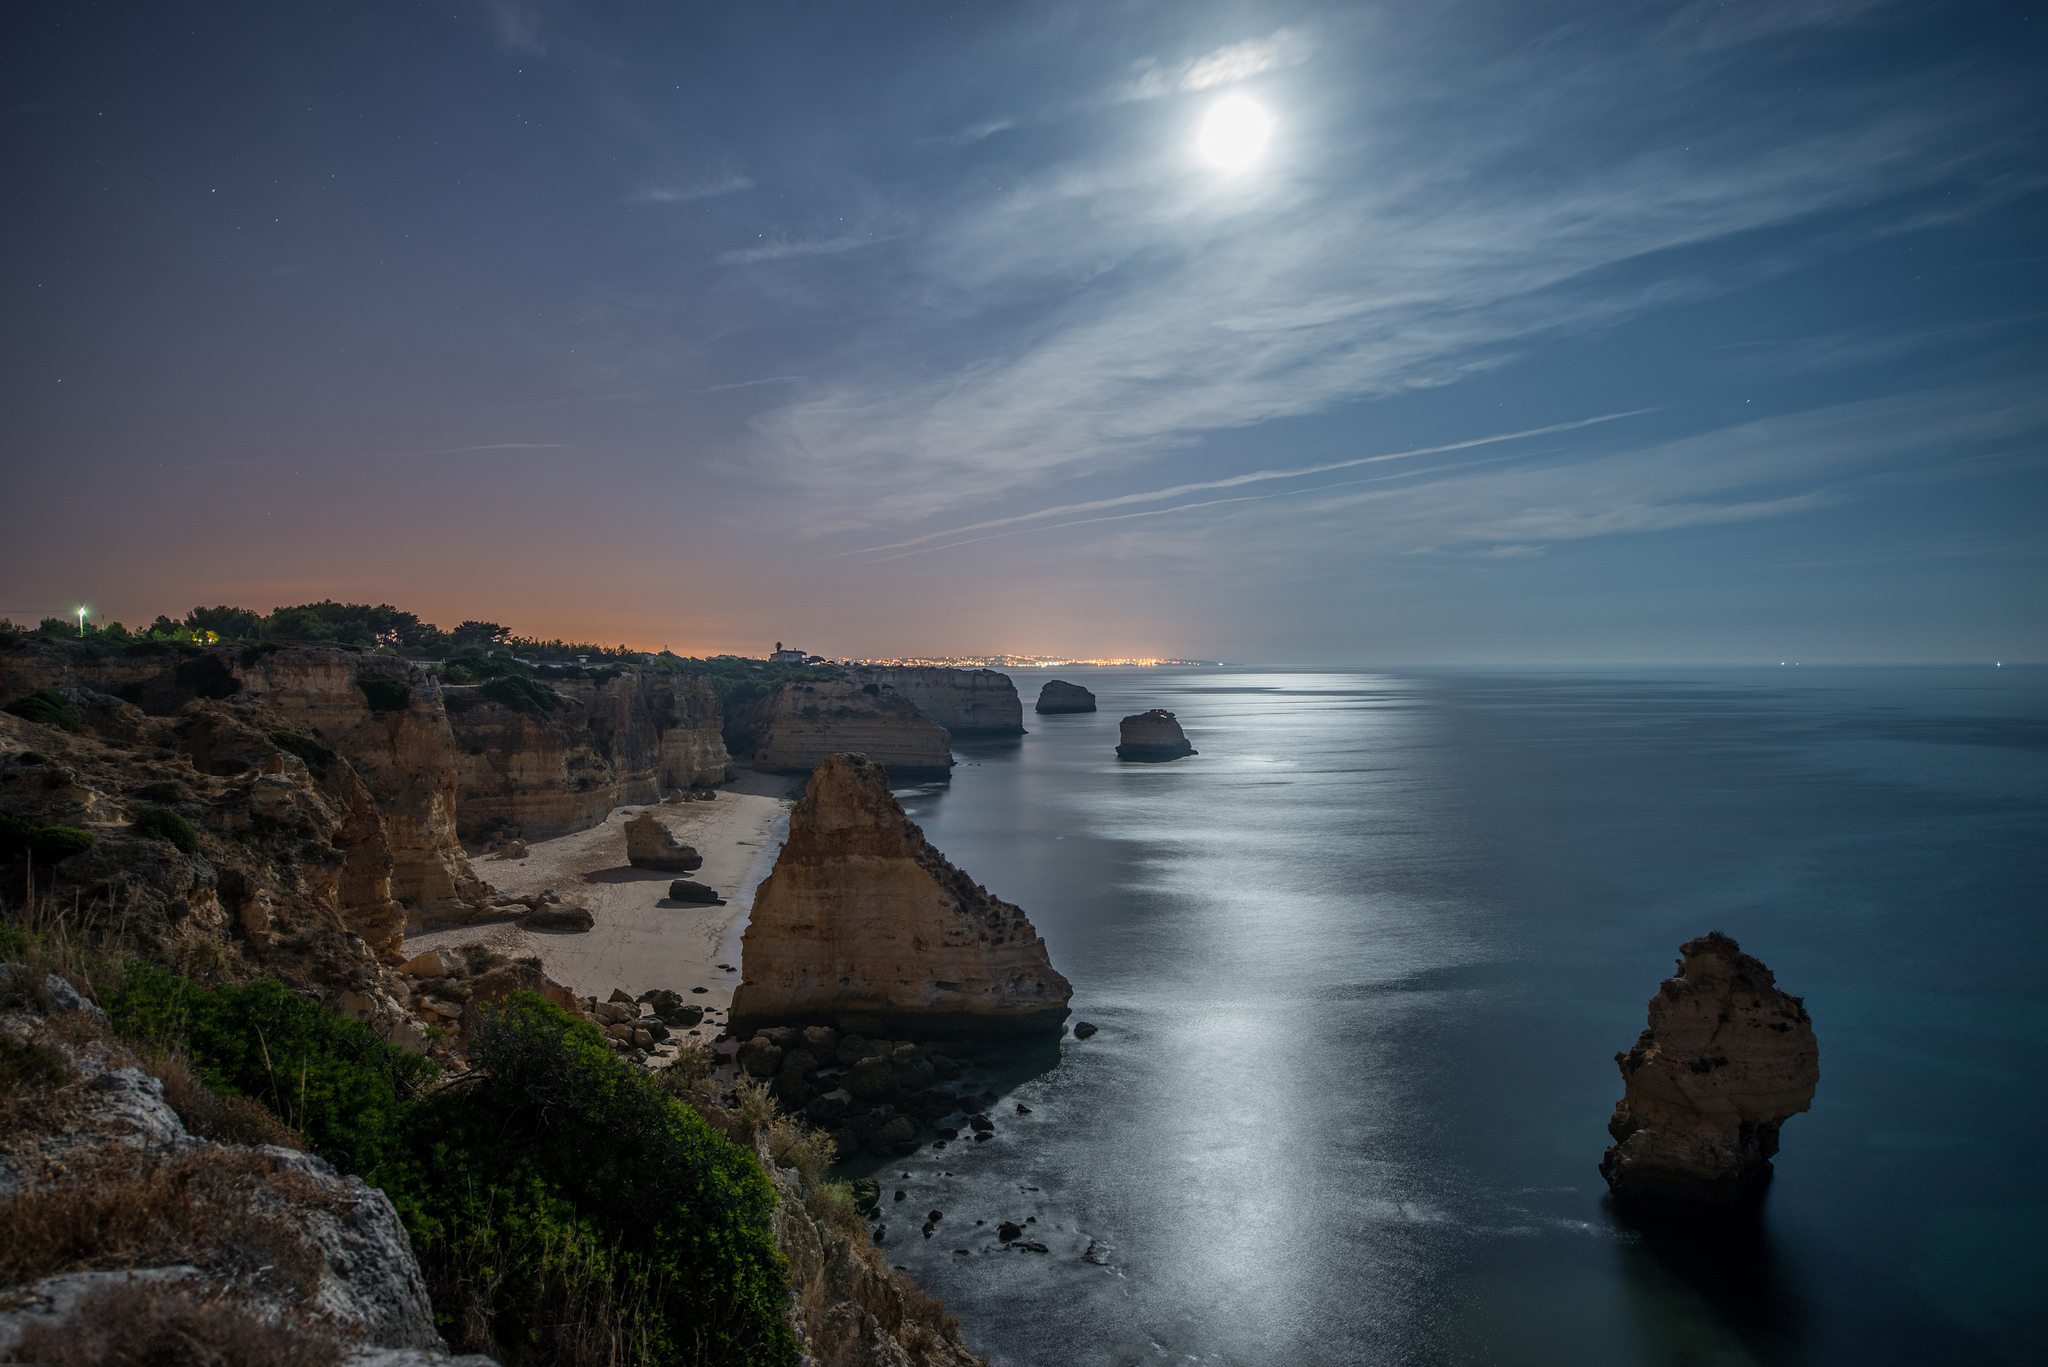 General 2048x1367 night sea Moon moonlight reflection rocks shore Praia da Marinha Portugal full moon low light